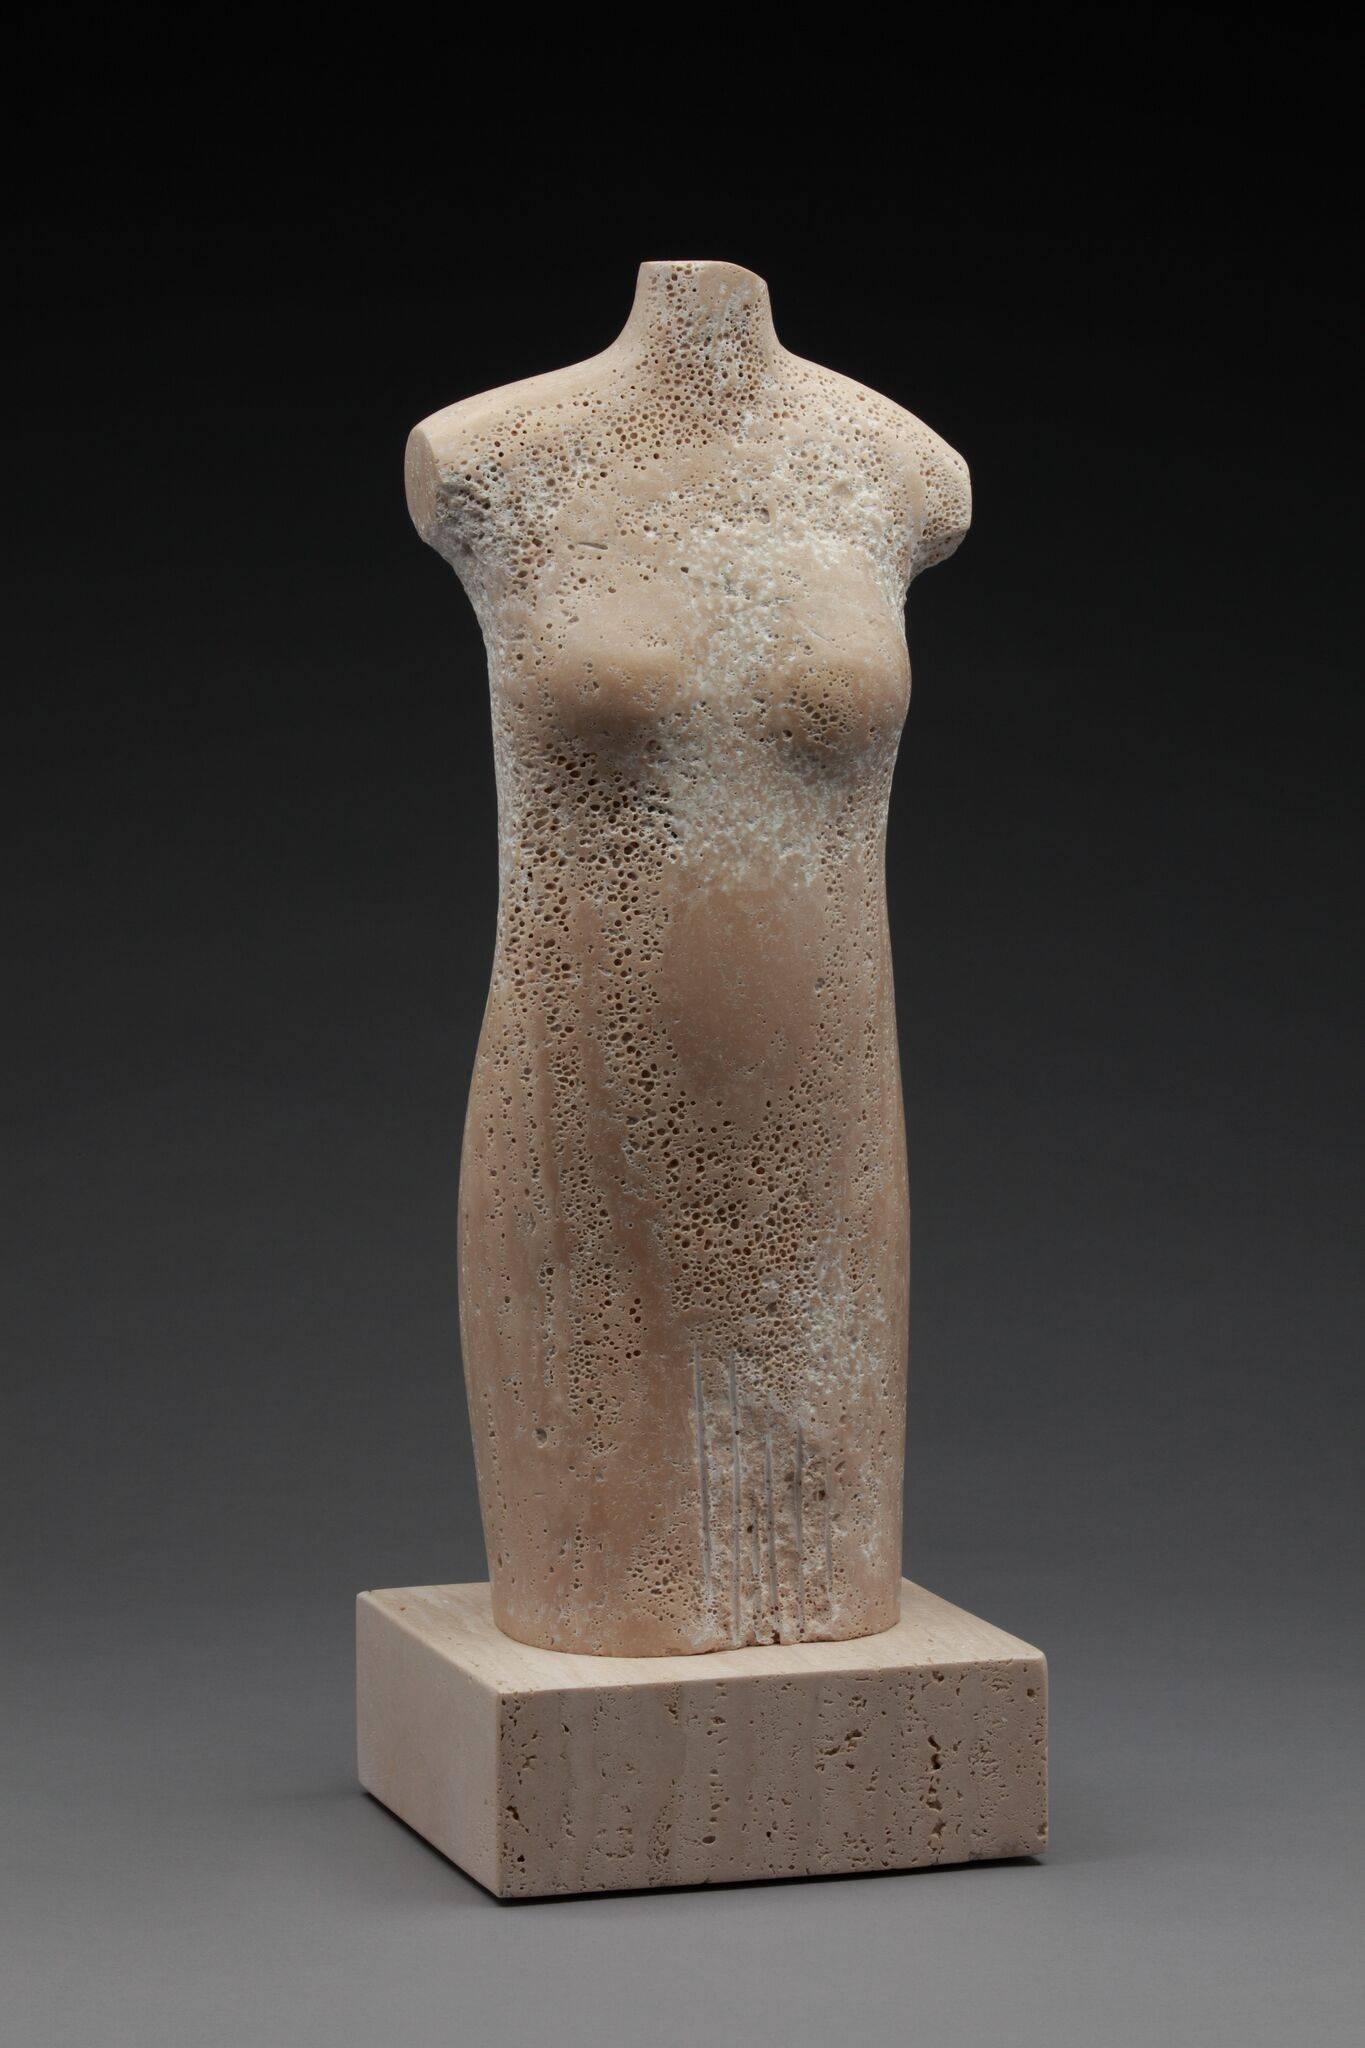 Claire McArdle Nude Sculpture - Torso Sol 